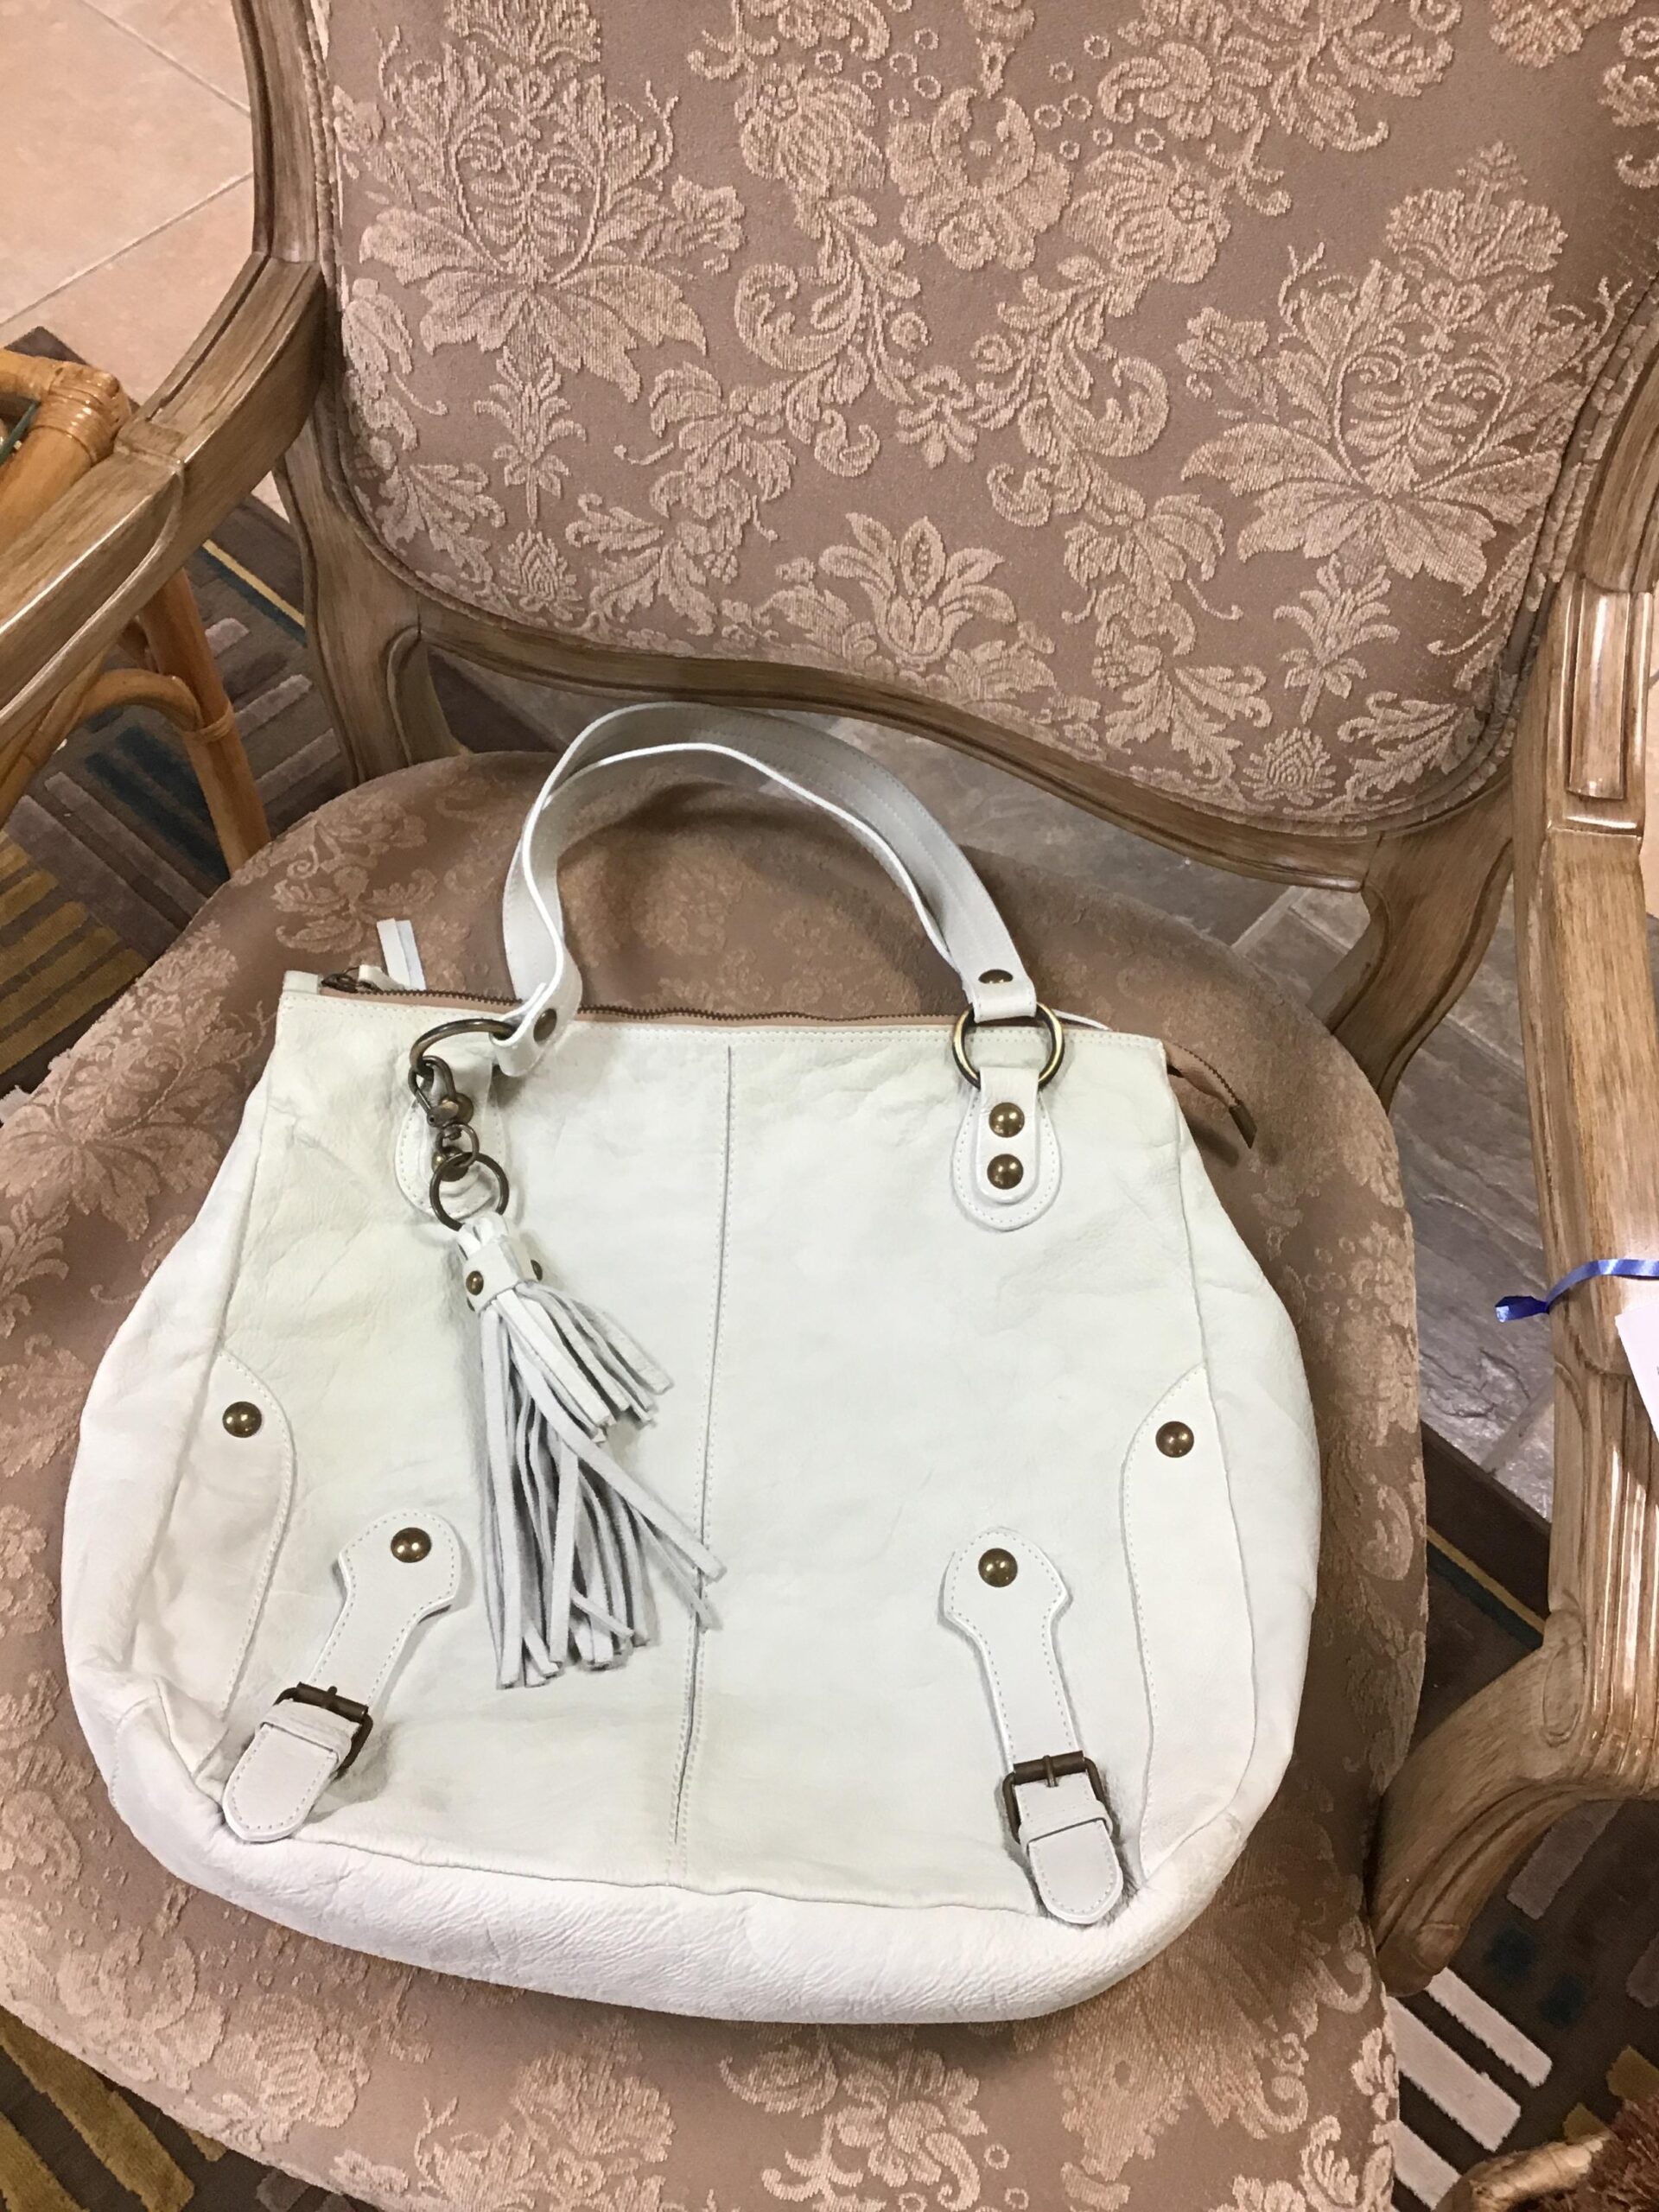 LAURA DI MAGGIO Ivory Leather Handbag